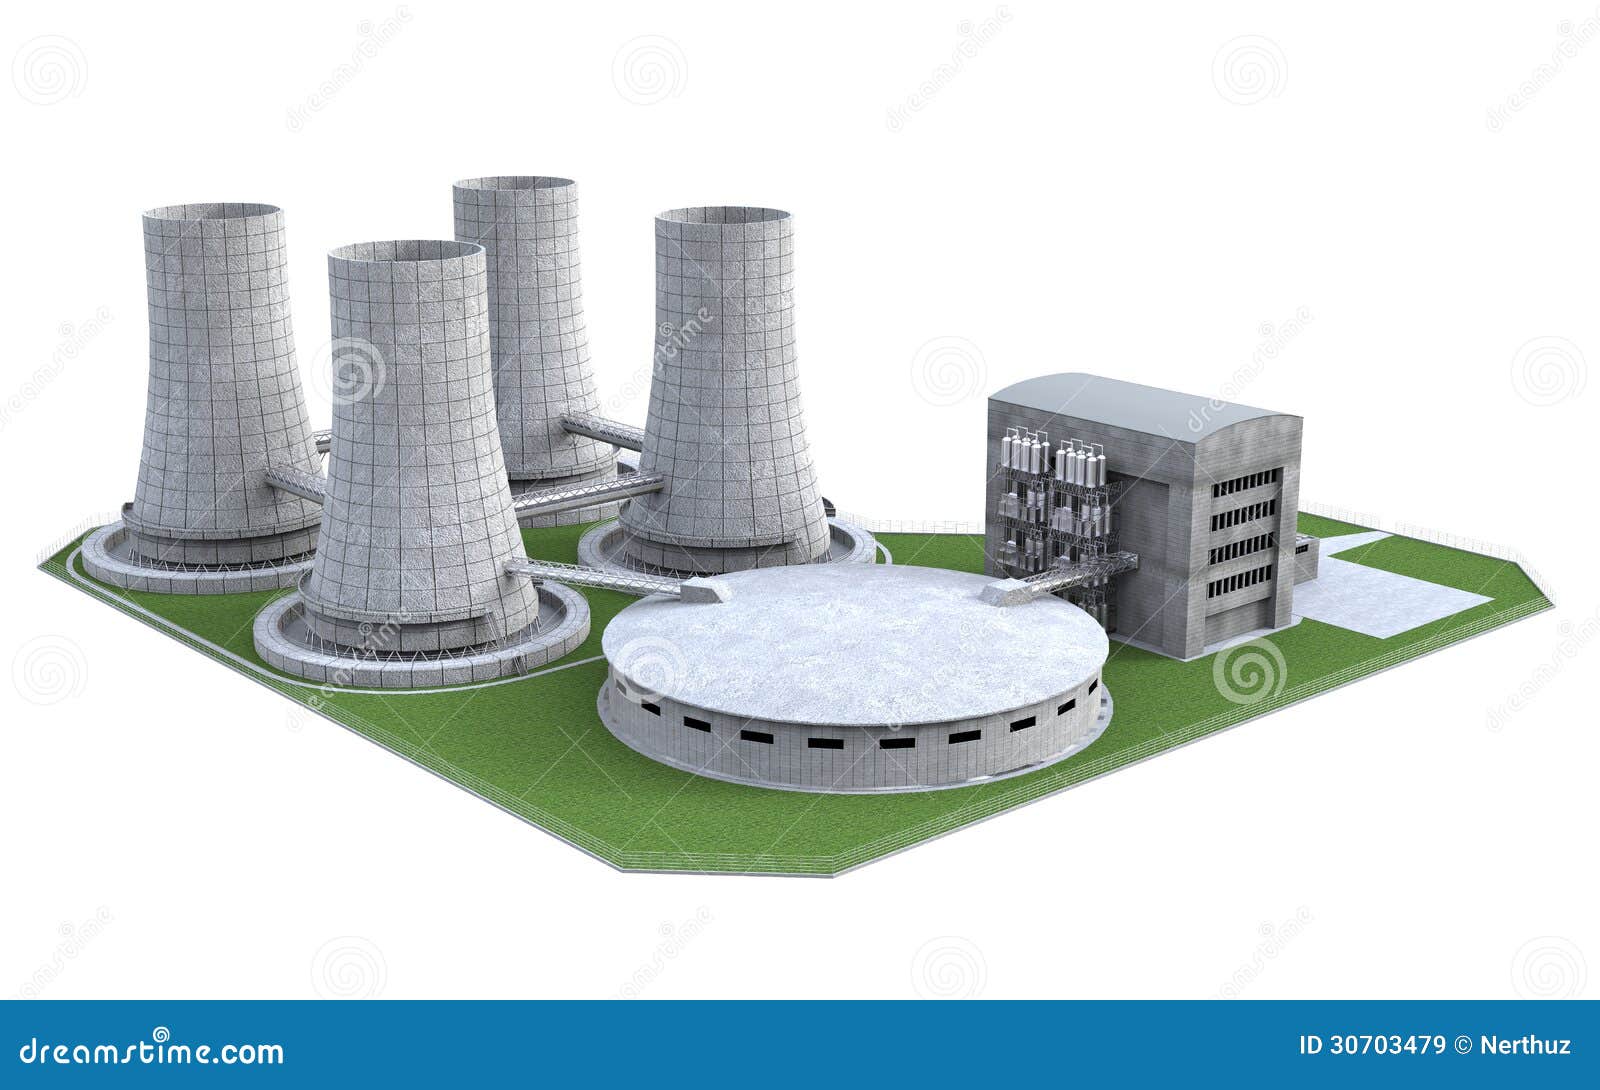 nuclear power plant clipart - photo #40